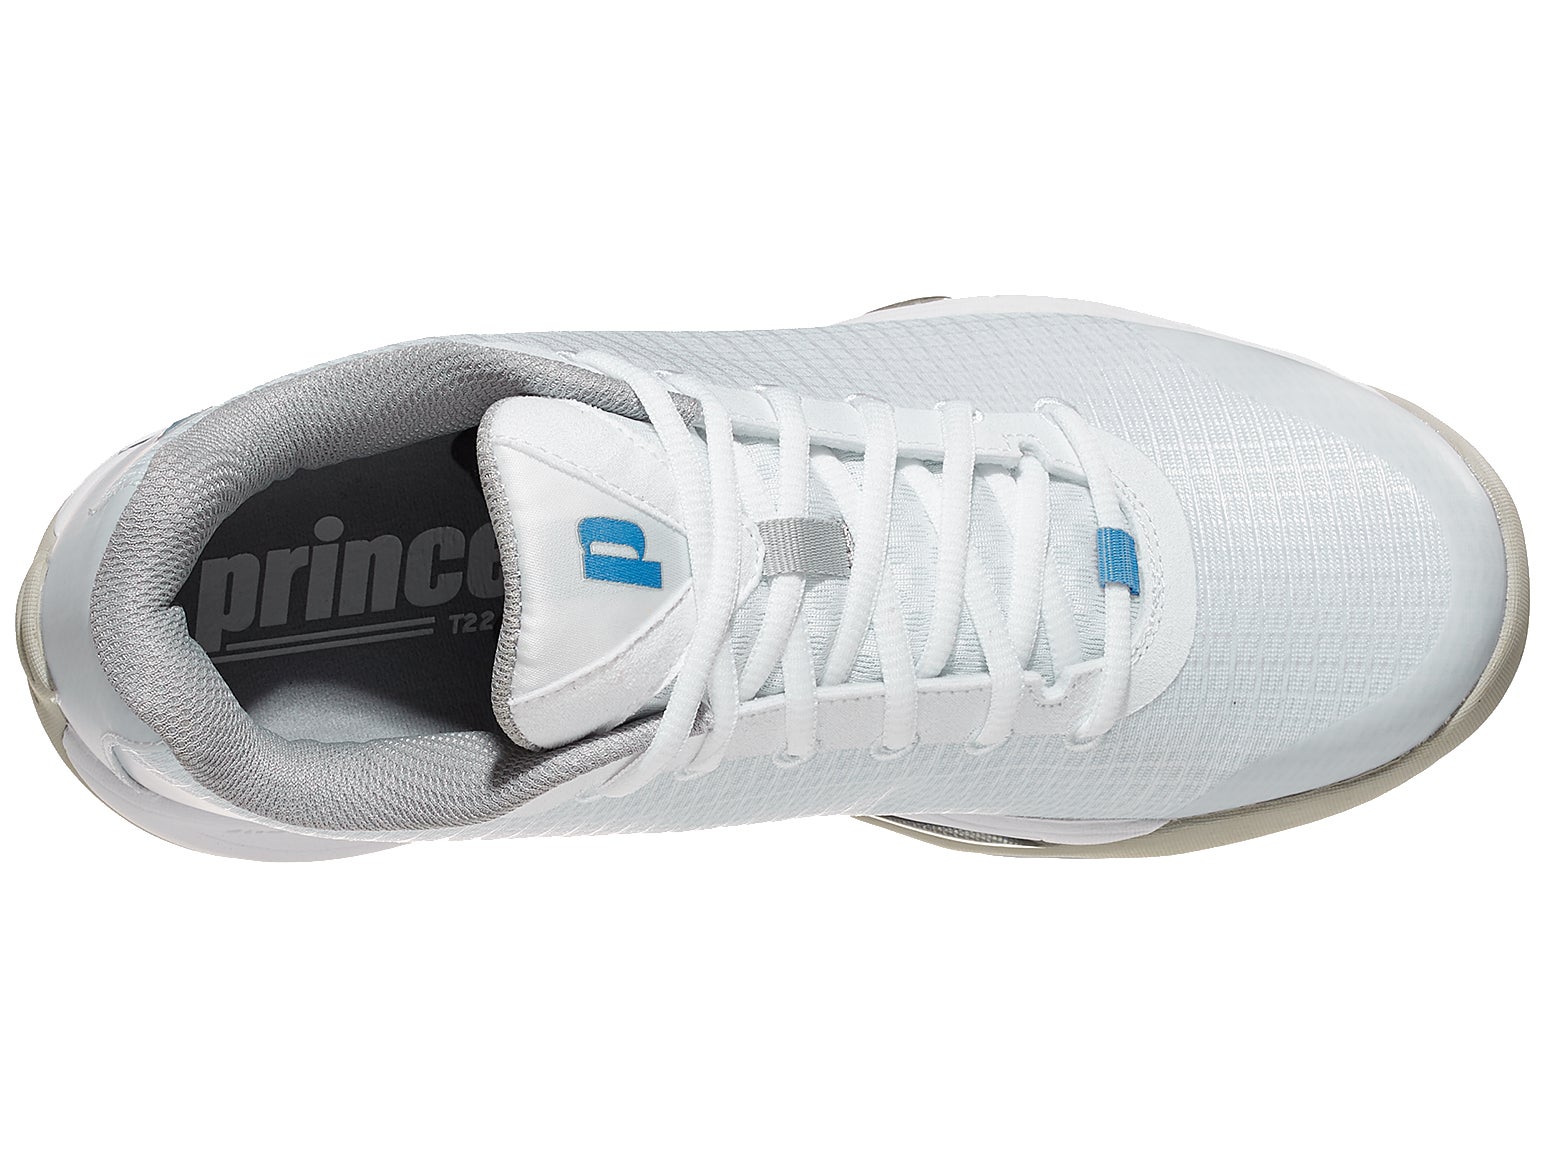 Details about   Prince T22.5 Women's Tennis Shoe White/Blue Authorized Dealer w/ Warranty 